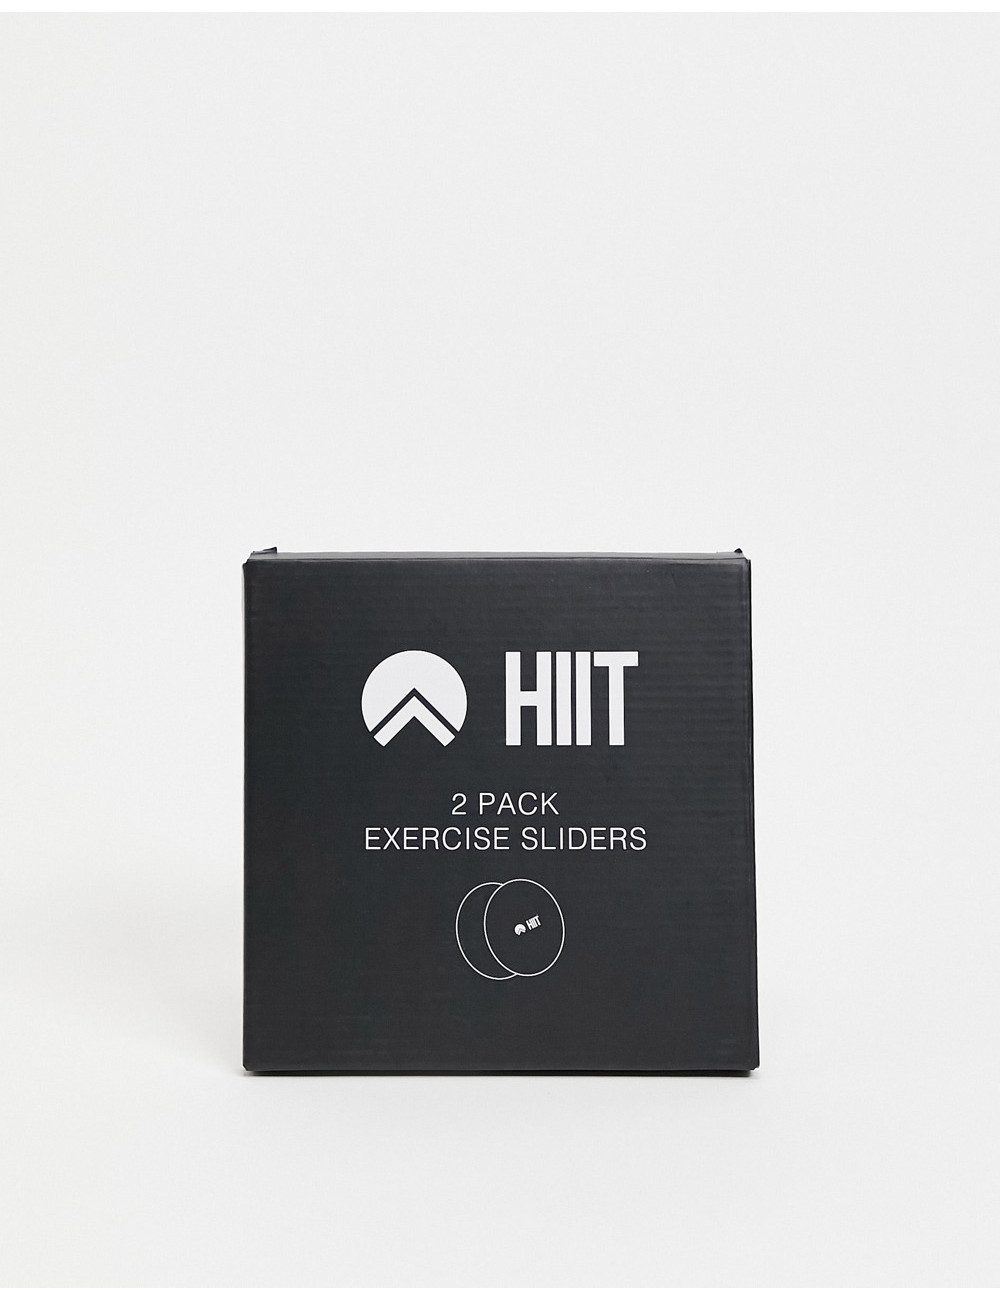 HIIT 2 pack exercise slider